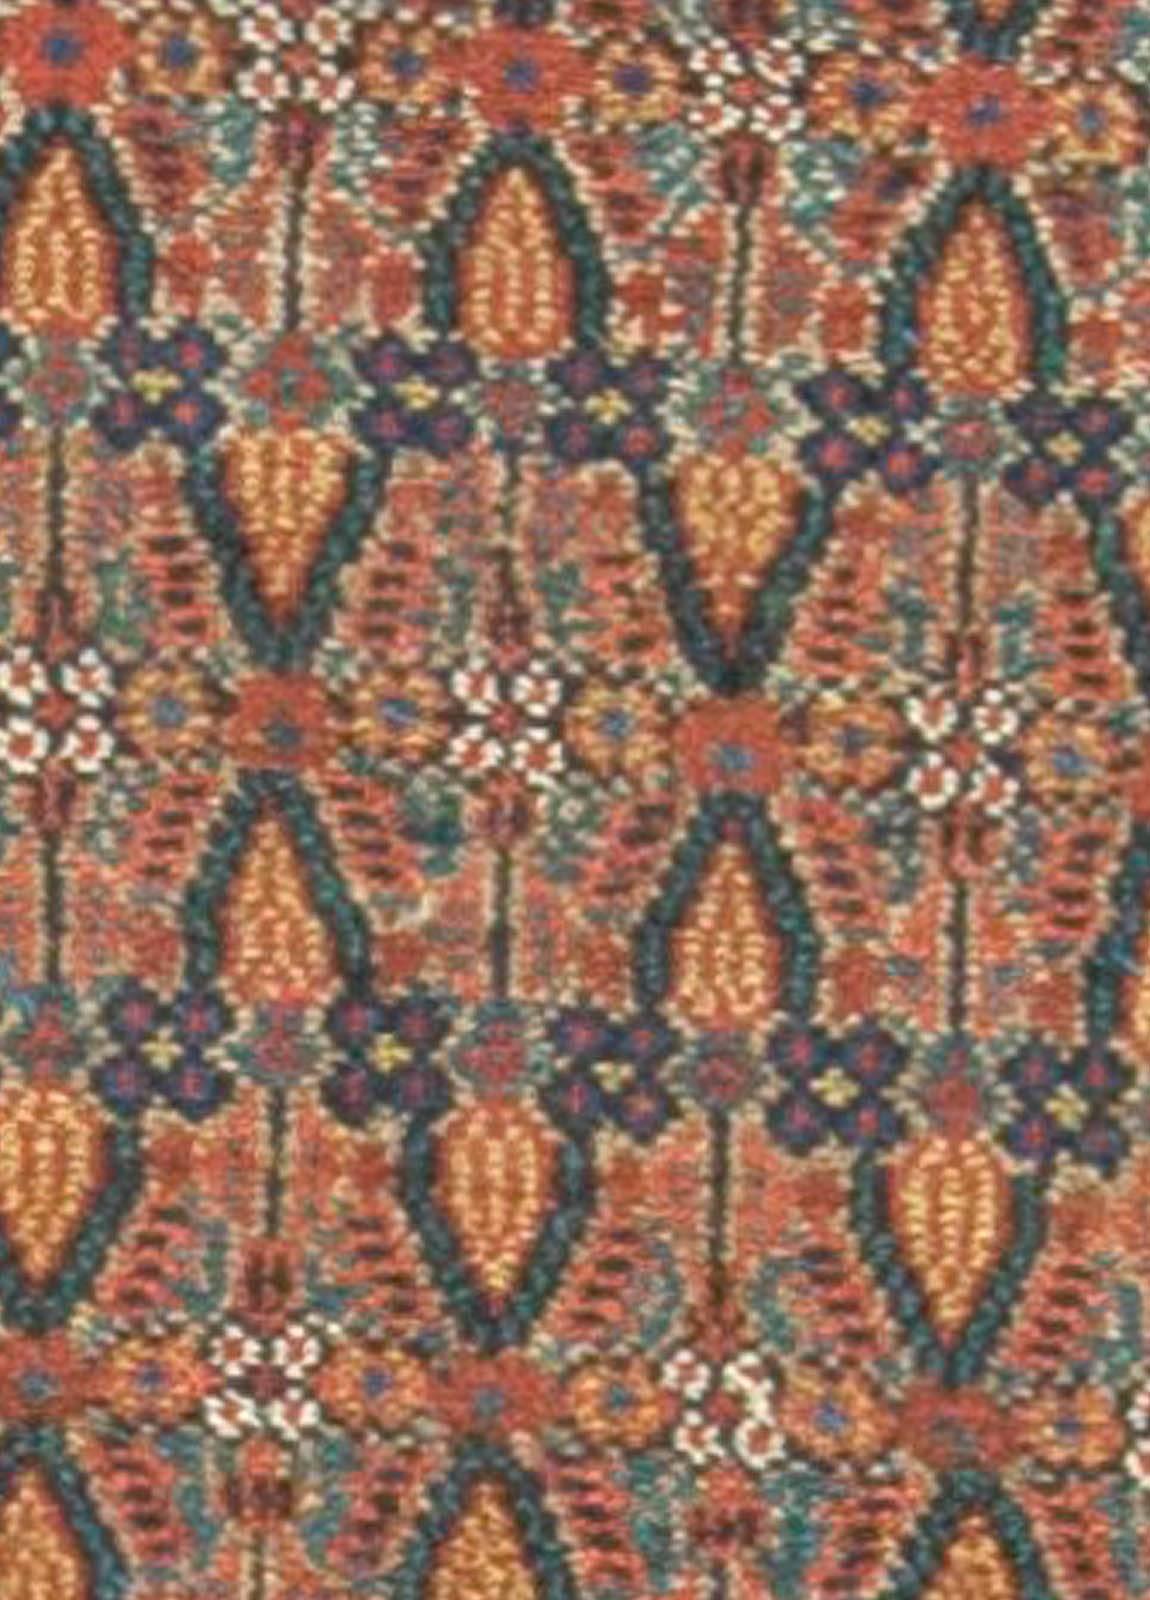 Antique Persian Hamadan rug.
Size: 3'2